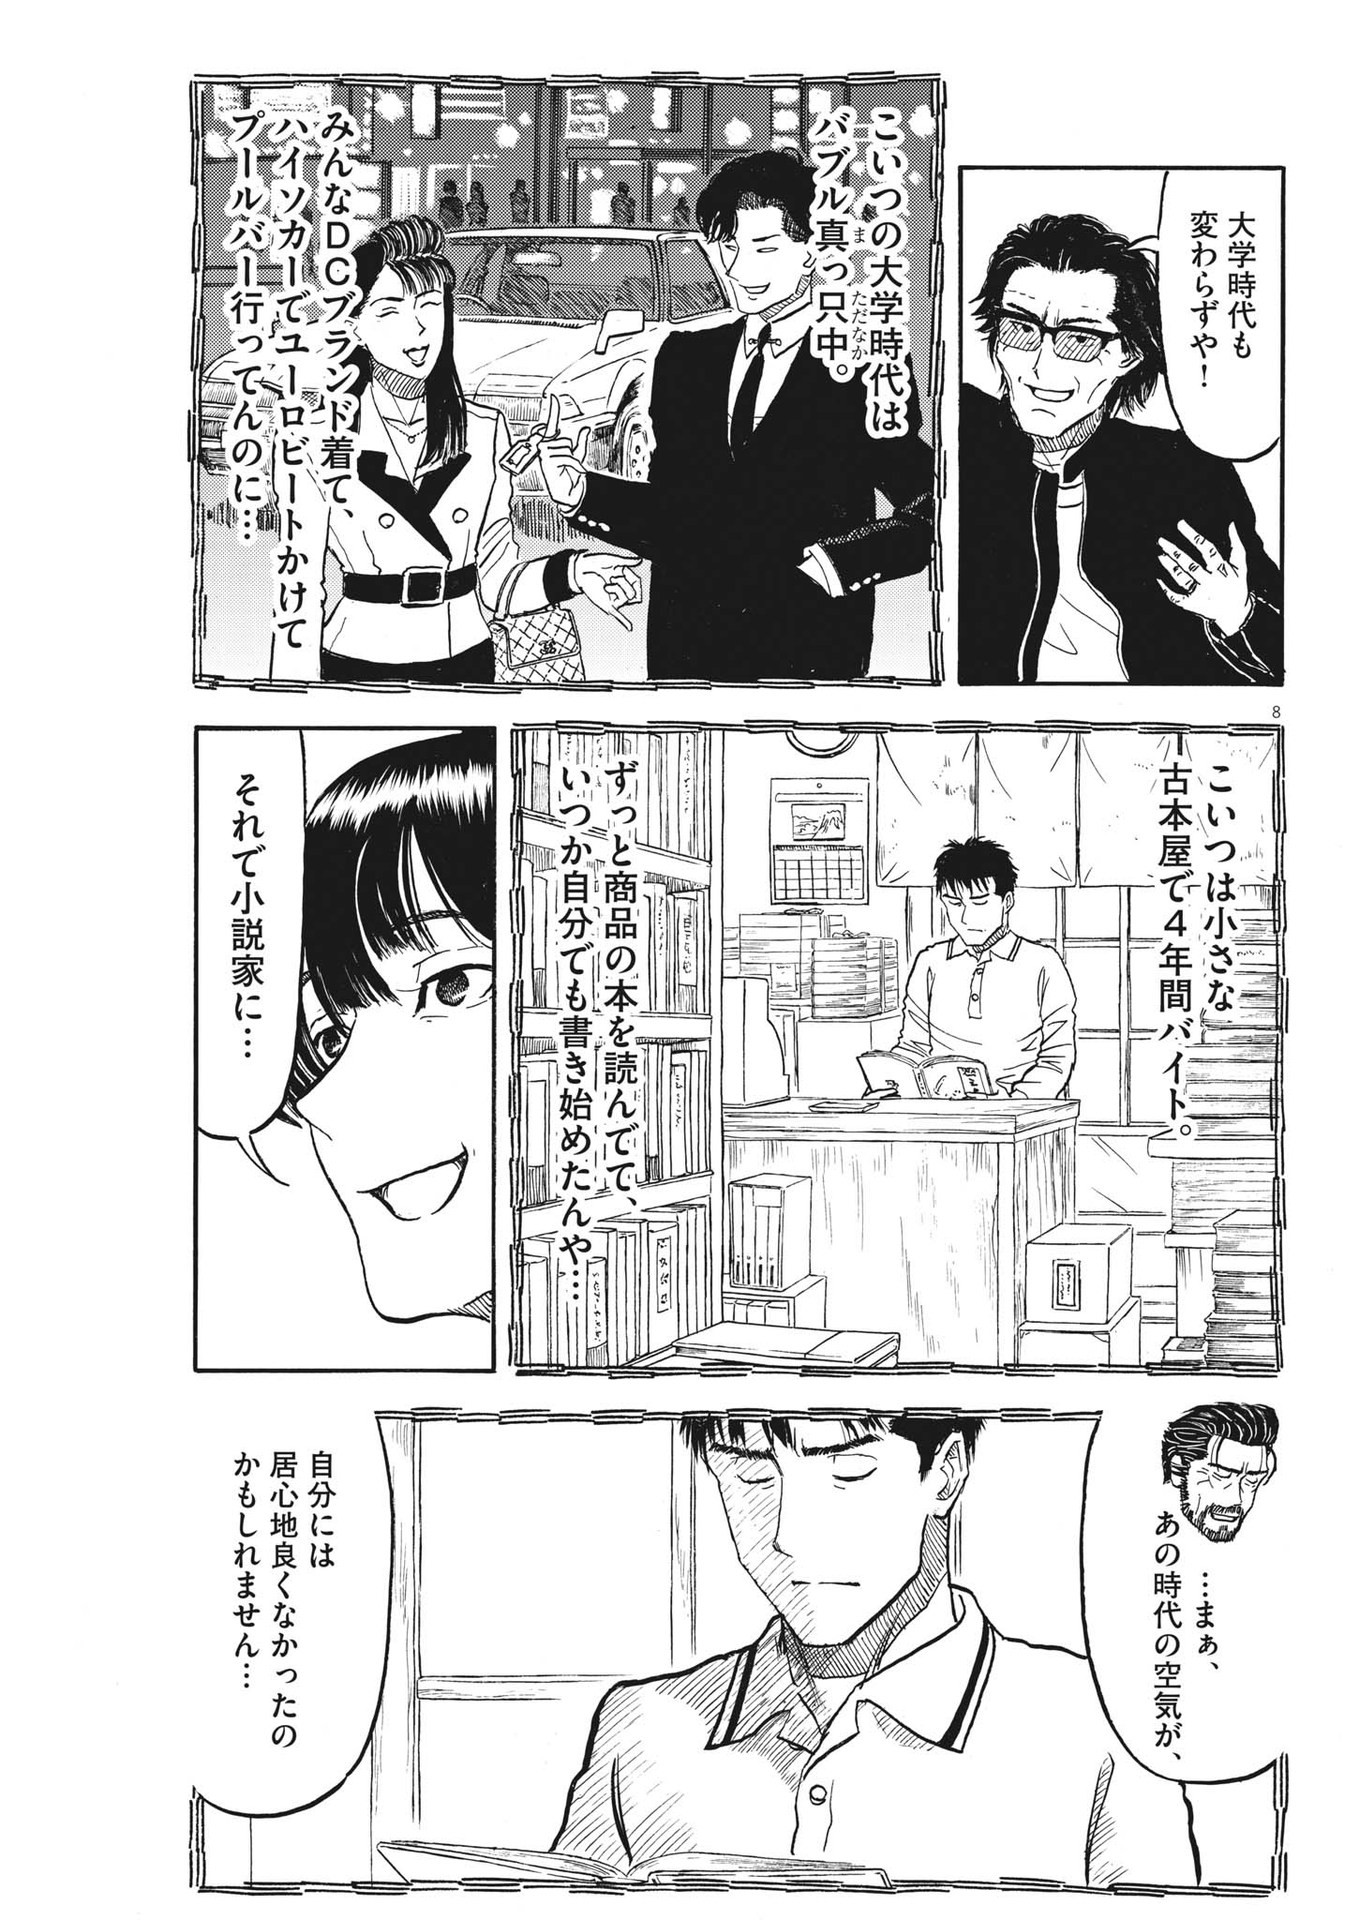 Komegura Fuufu no Recipe-chou - Chapter 31 - Page 8